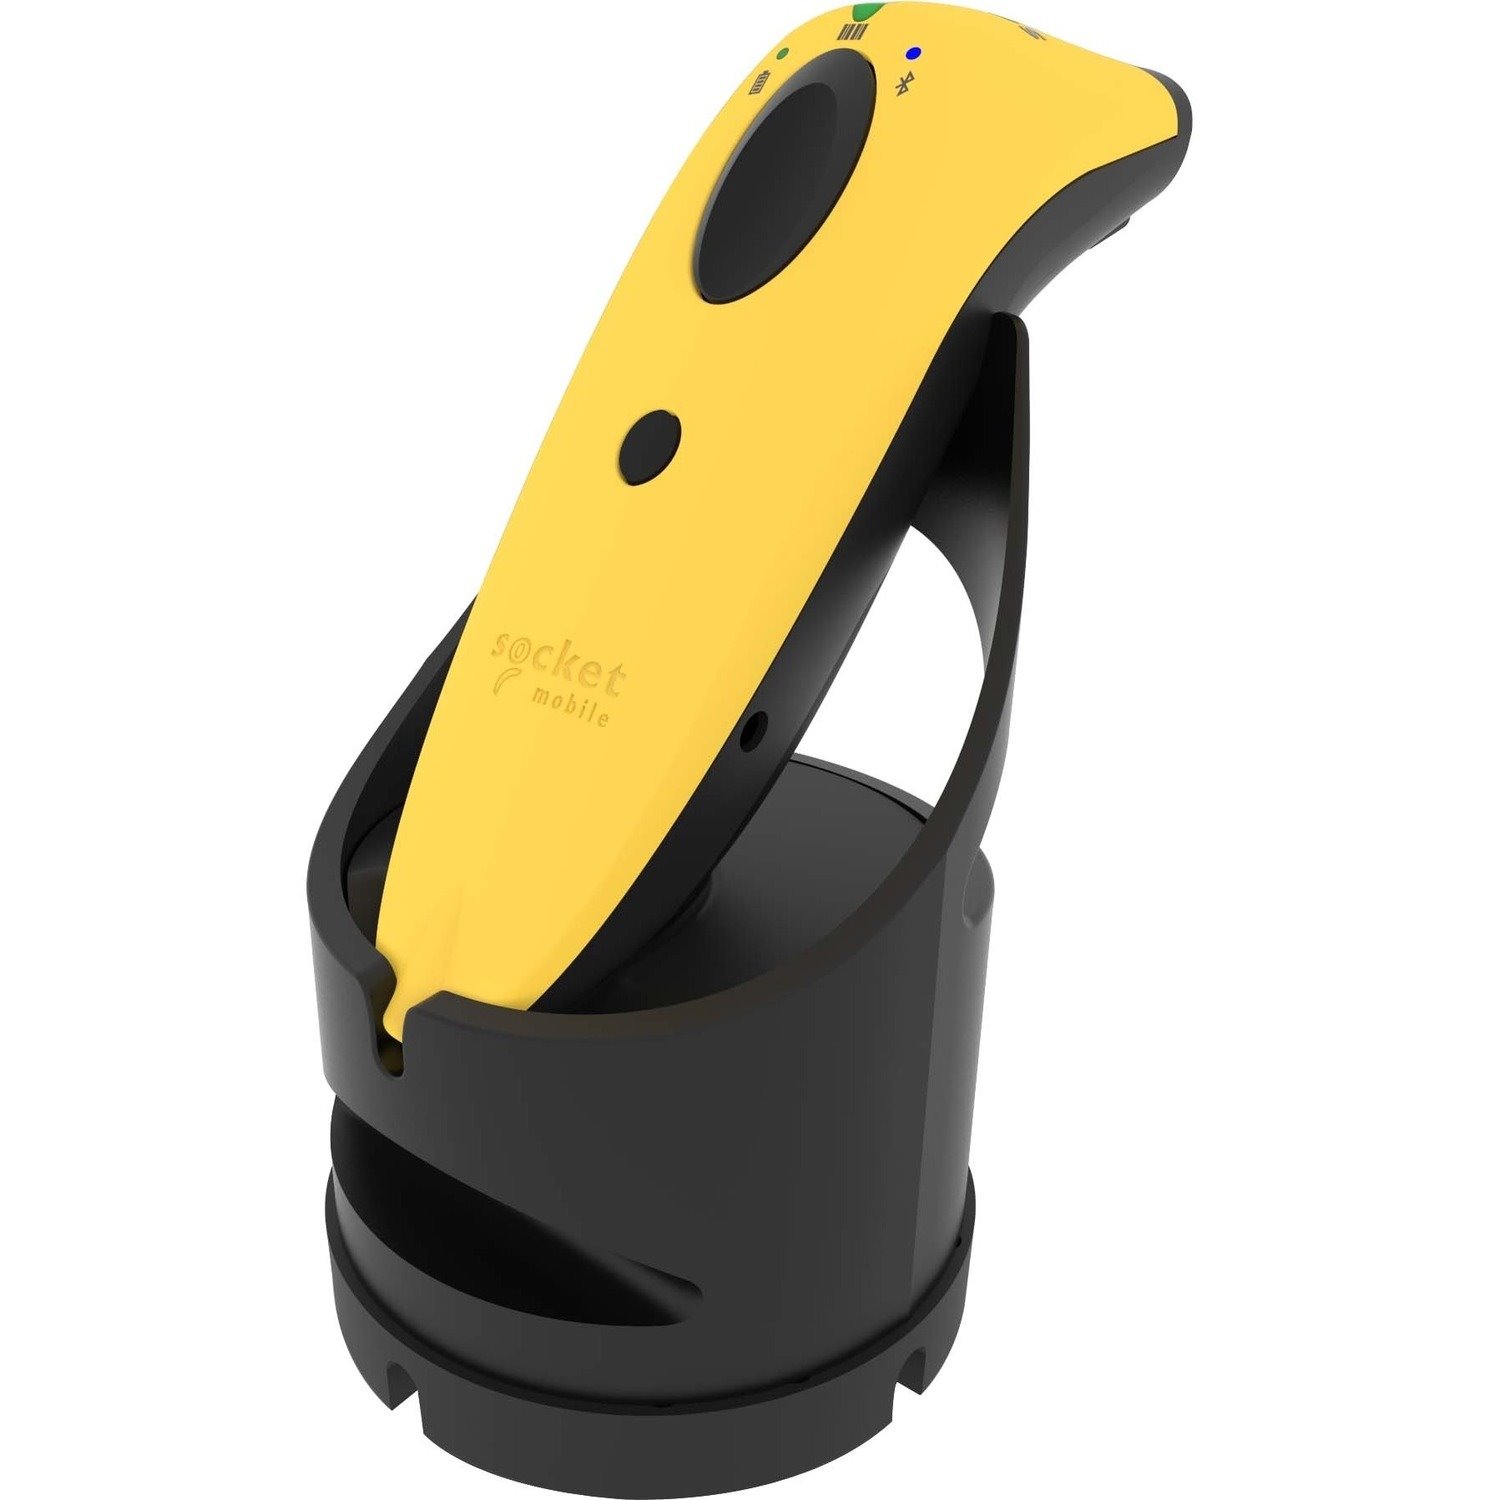 Socket Mobile SocketScan&reg; S730, Laser Barcode Scanner, Yellow & Black Charging Dock